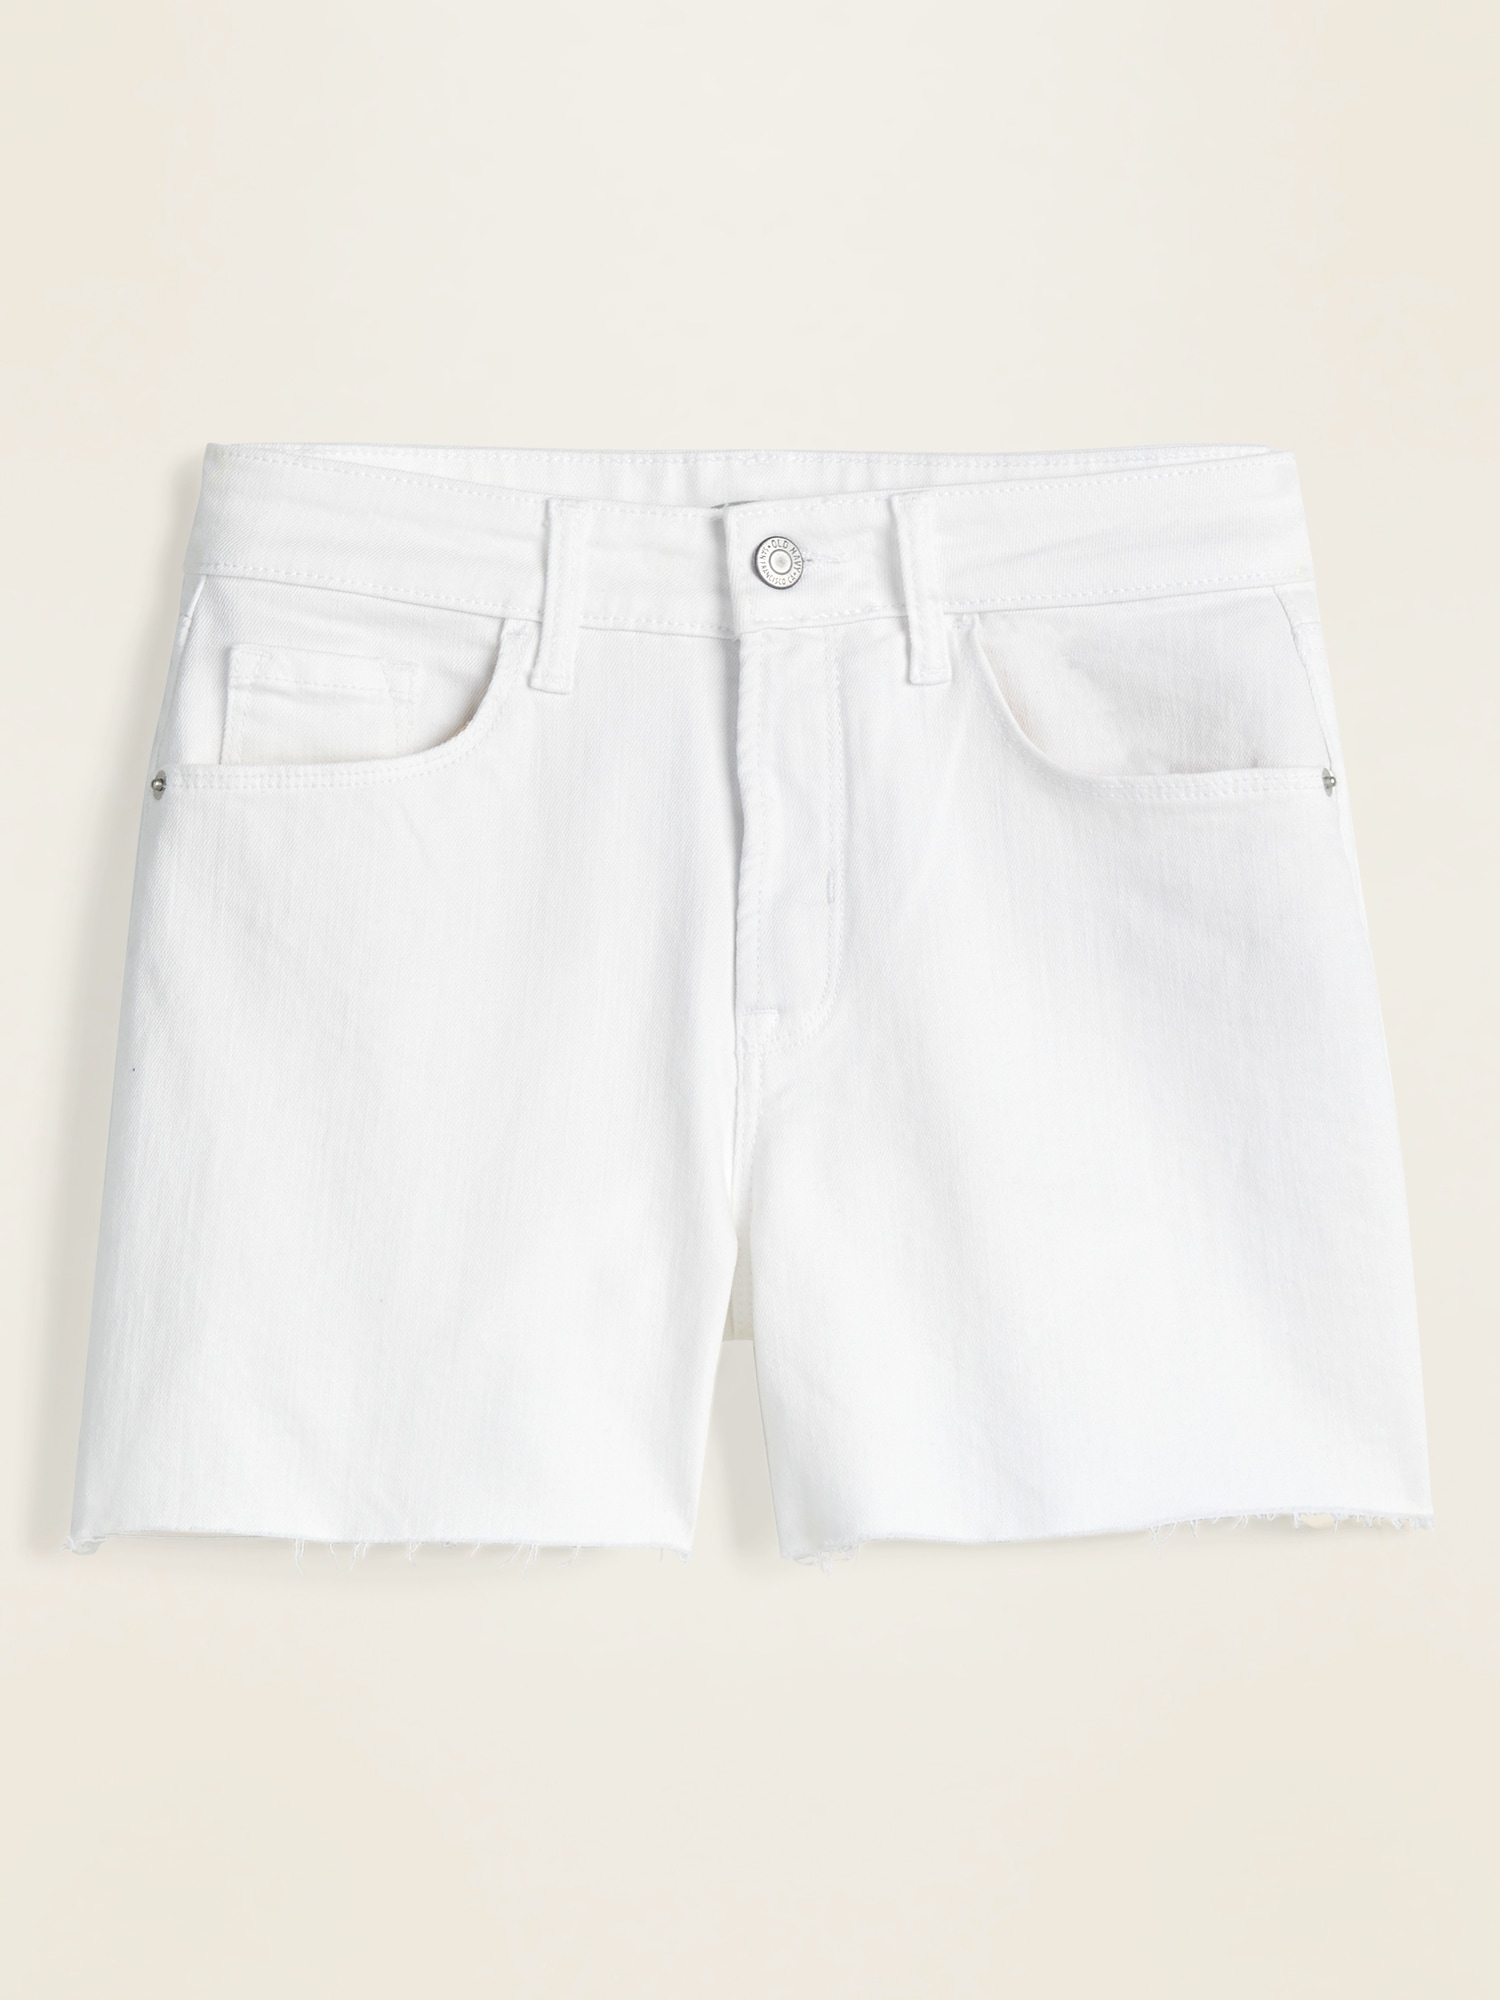 old navy white jean shorts